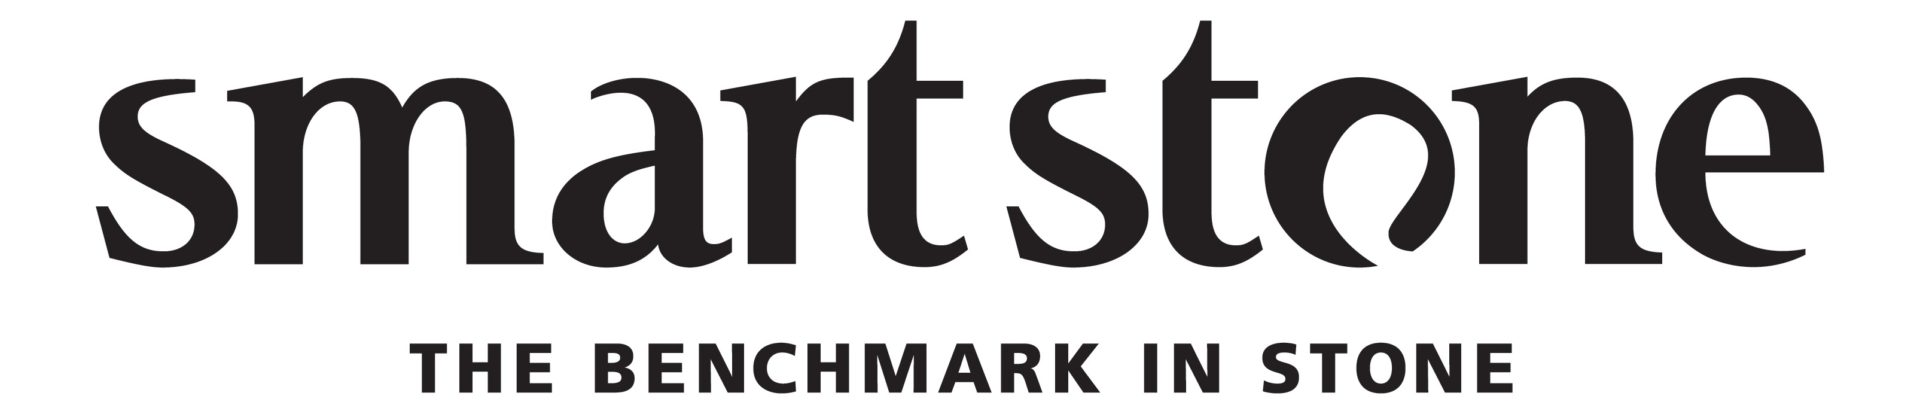 Smartstone-logo